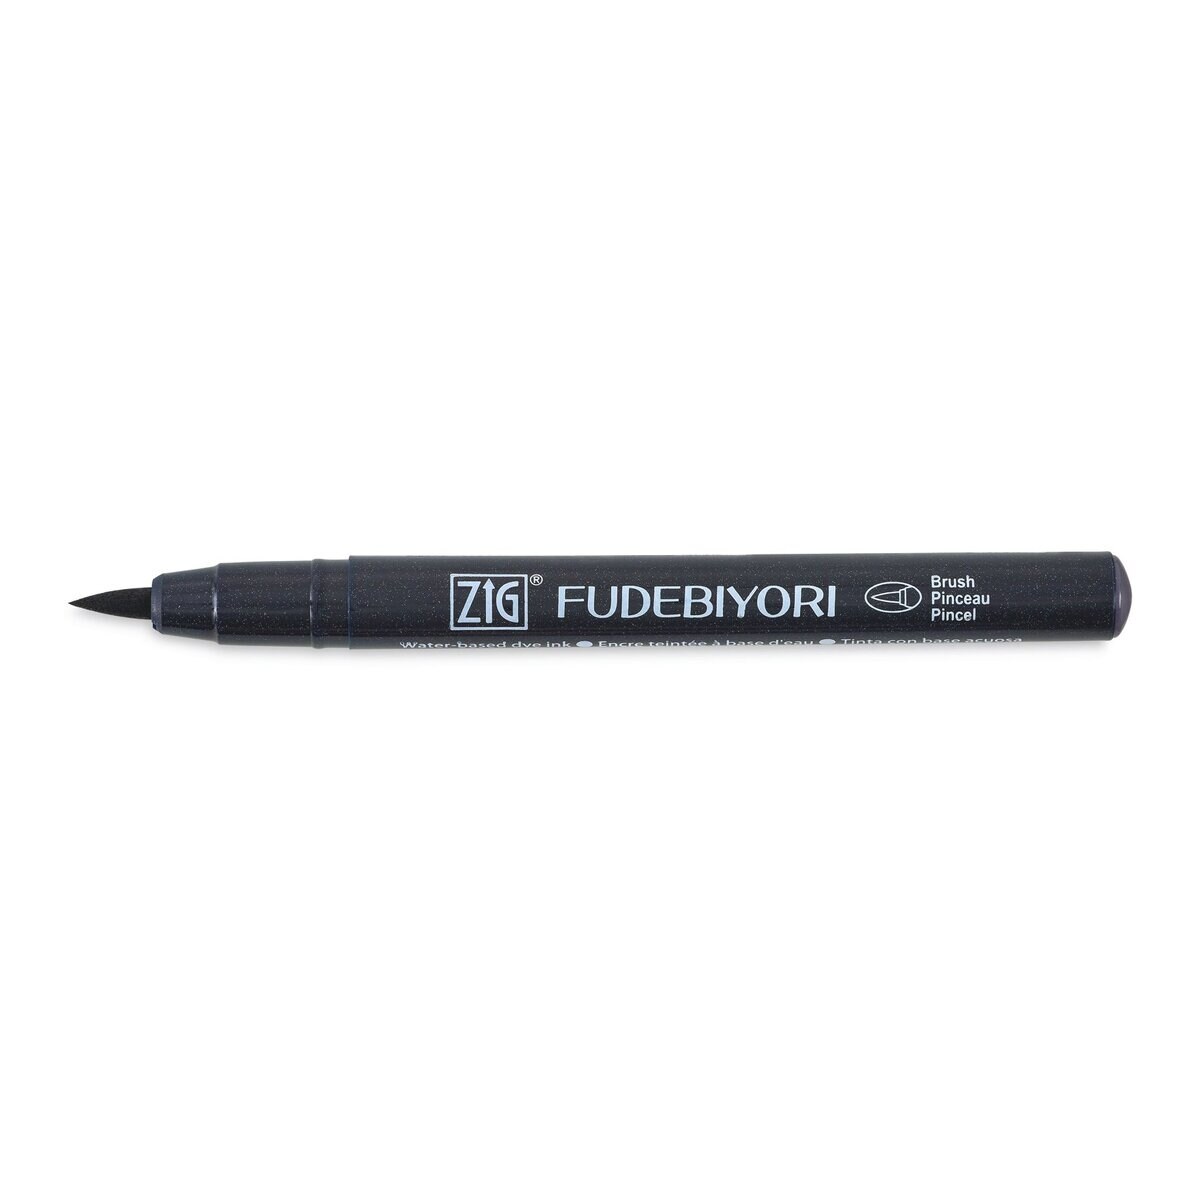 Zig Fudebiyori Brush Pens